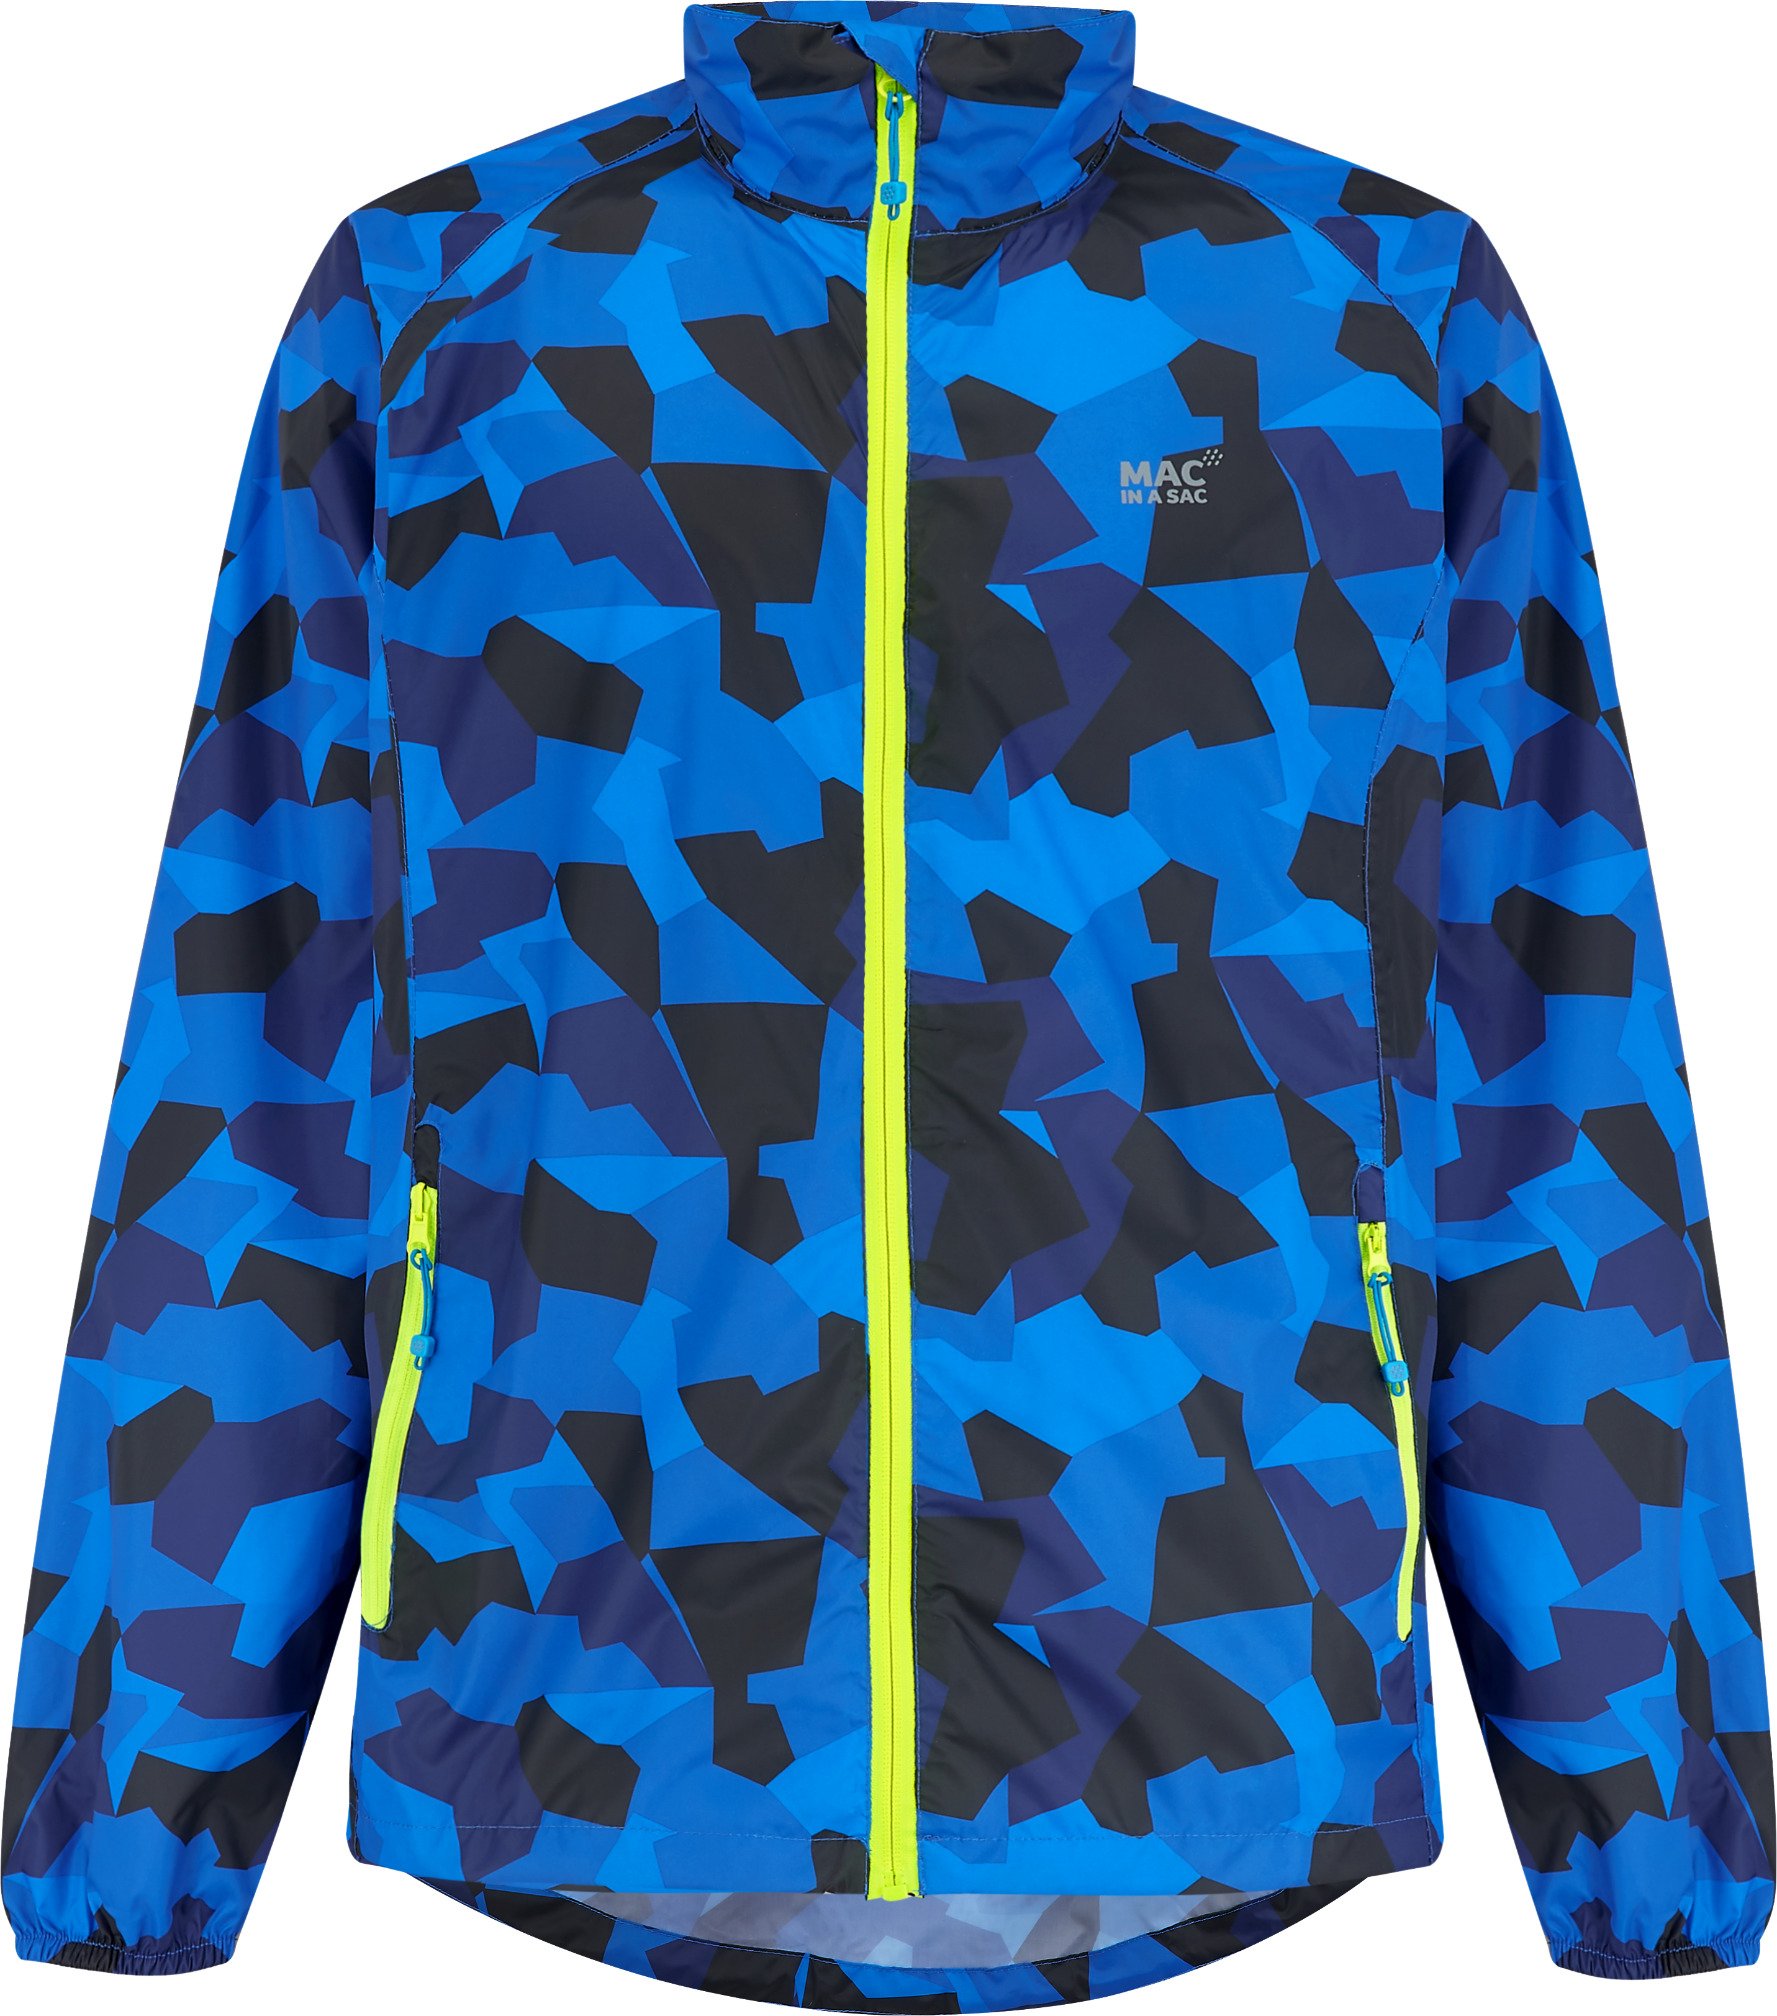 Pánská nepromokavá bunda MAC Edition Blue Camo 10k Velikost: L